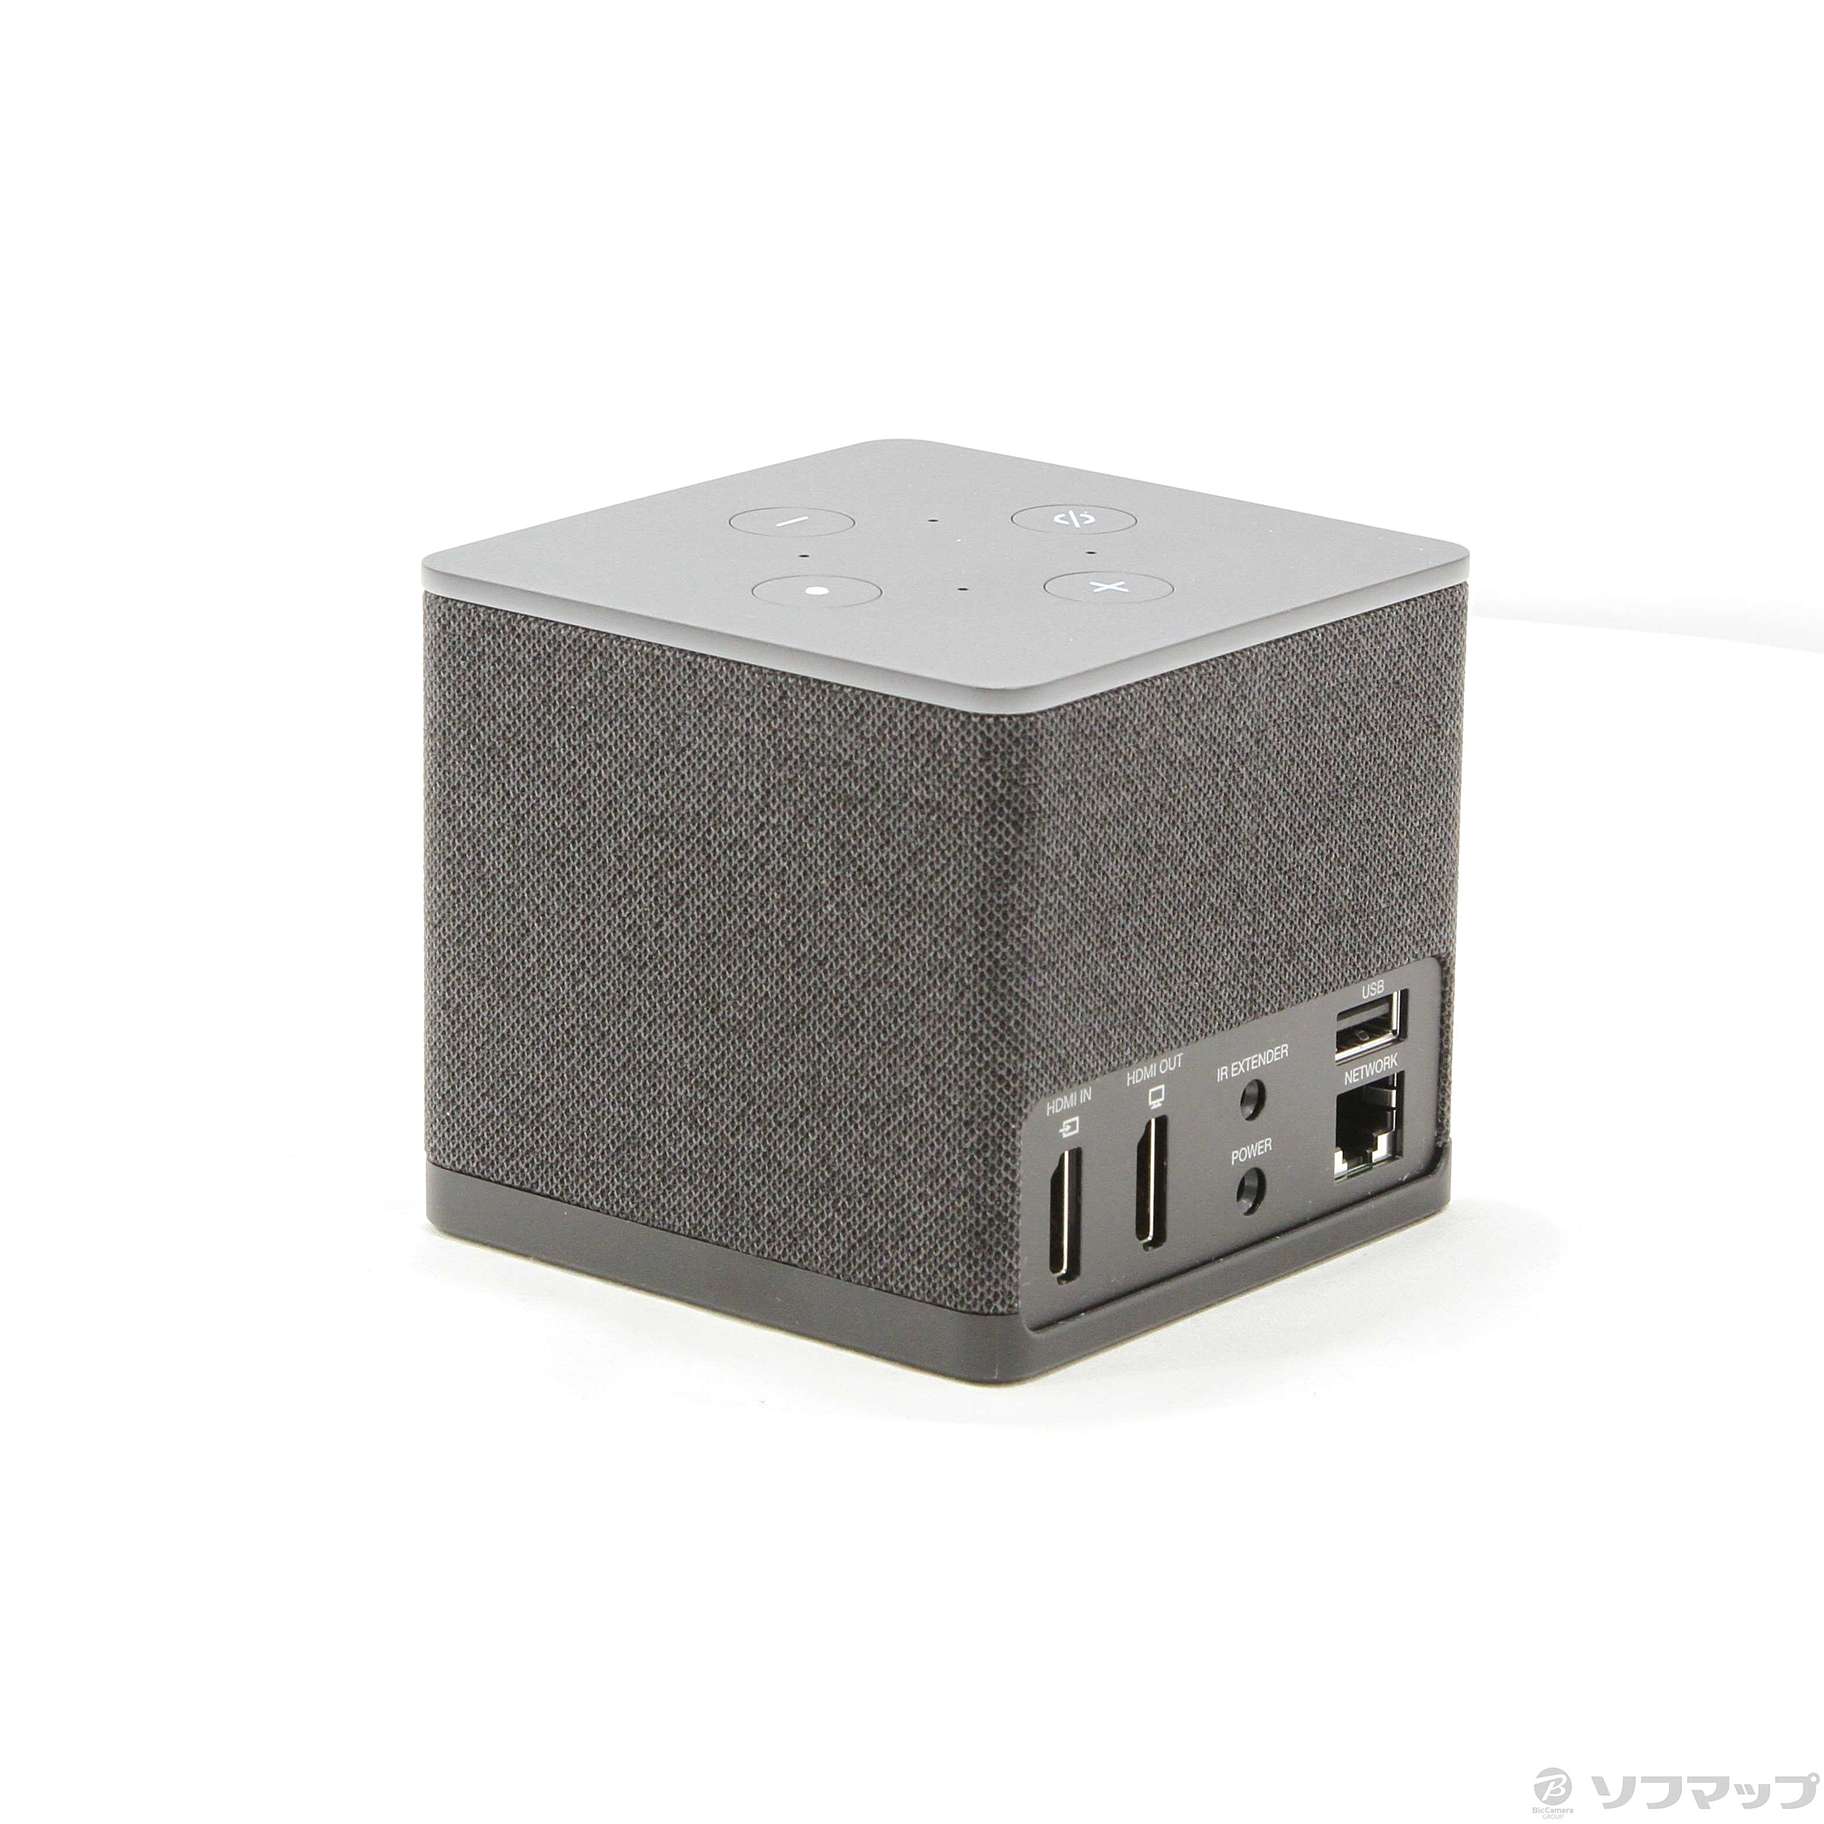 Fire TV Cube 第3世代 Alexa対応音声認識リモコン付属 ストリーミングメディアプレーヤー